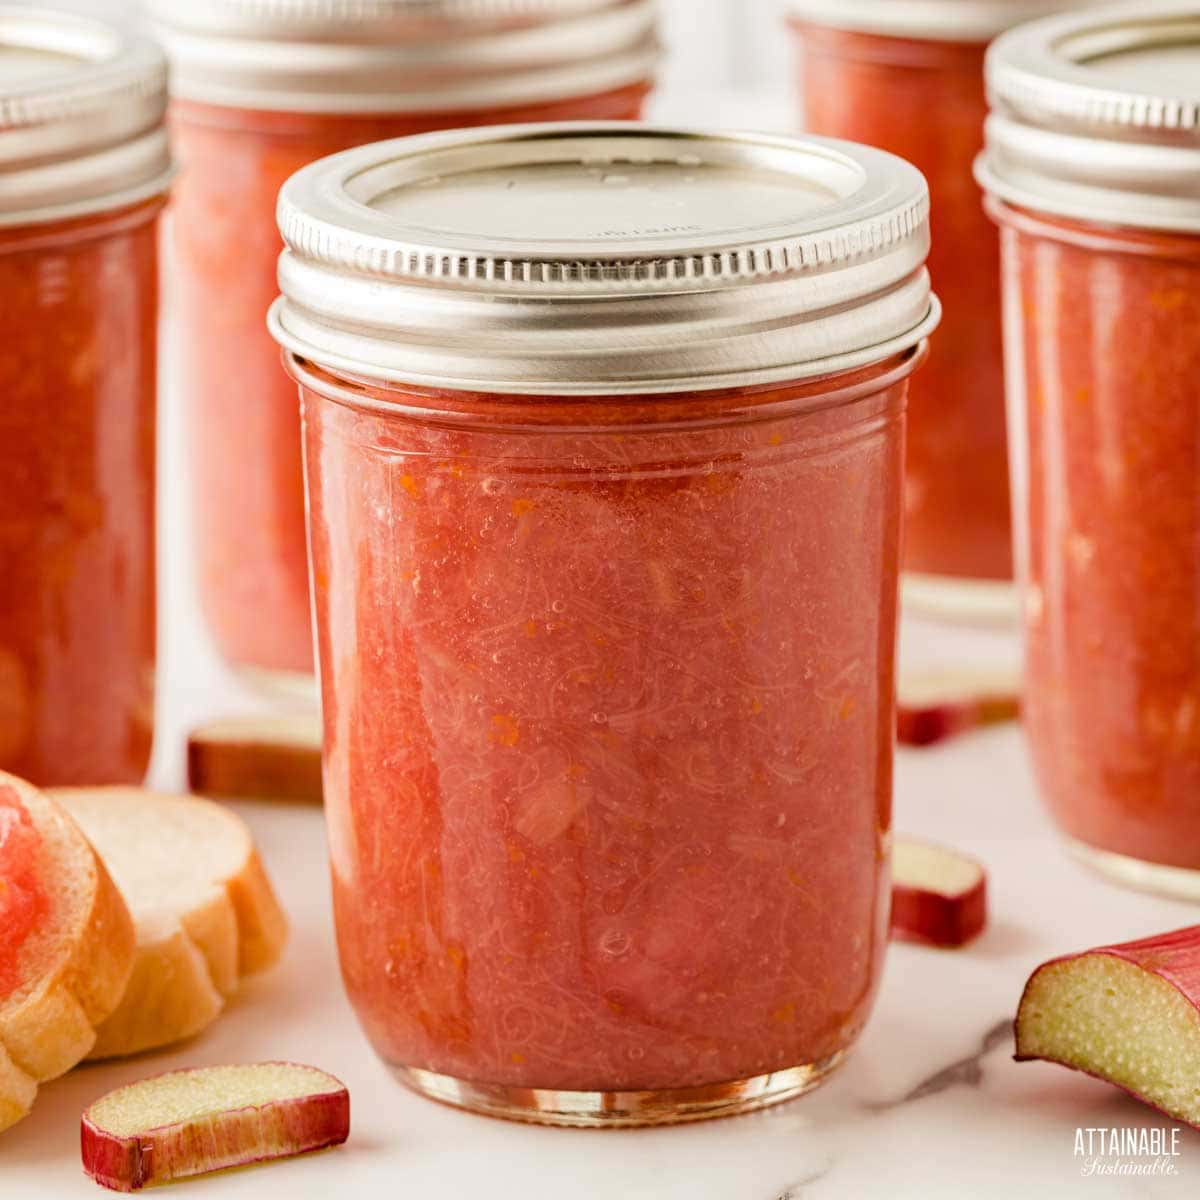 filled and sealed jars of rhubarb jam.